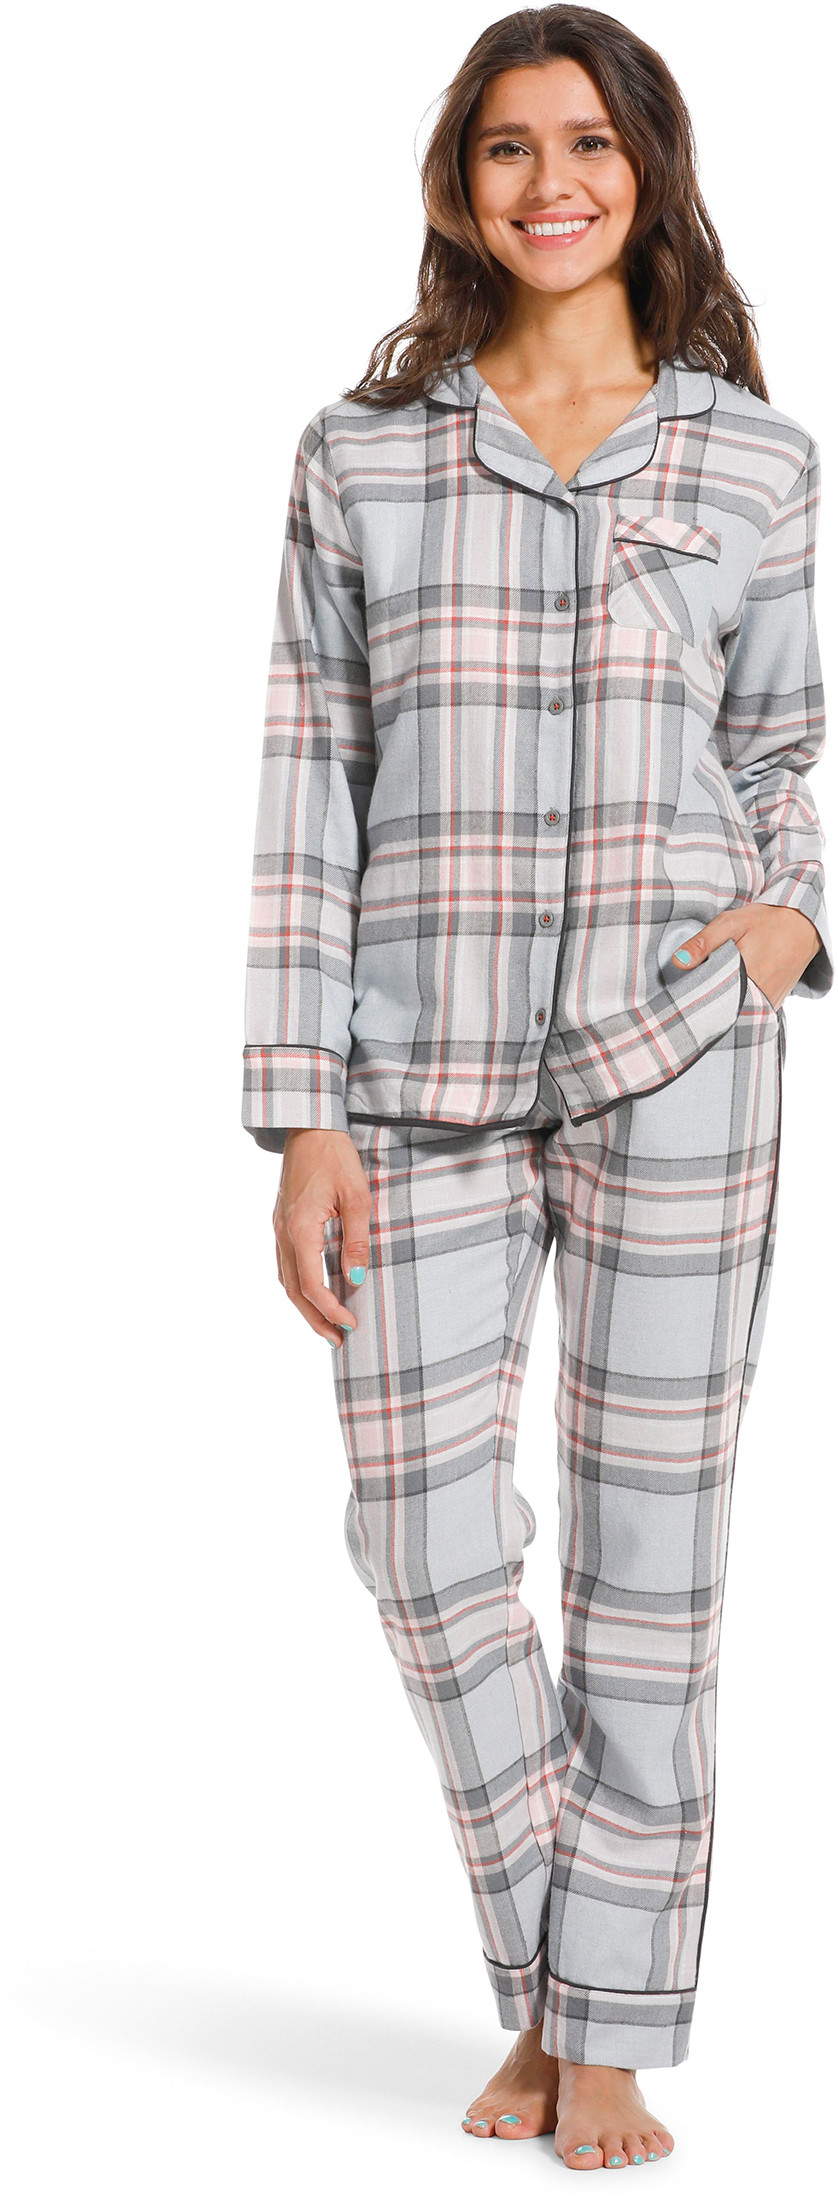 Rebelle dames pyjama flanel 21222-458-6-36